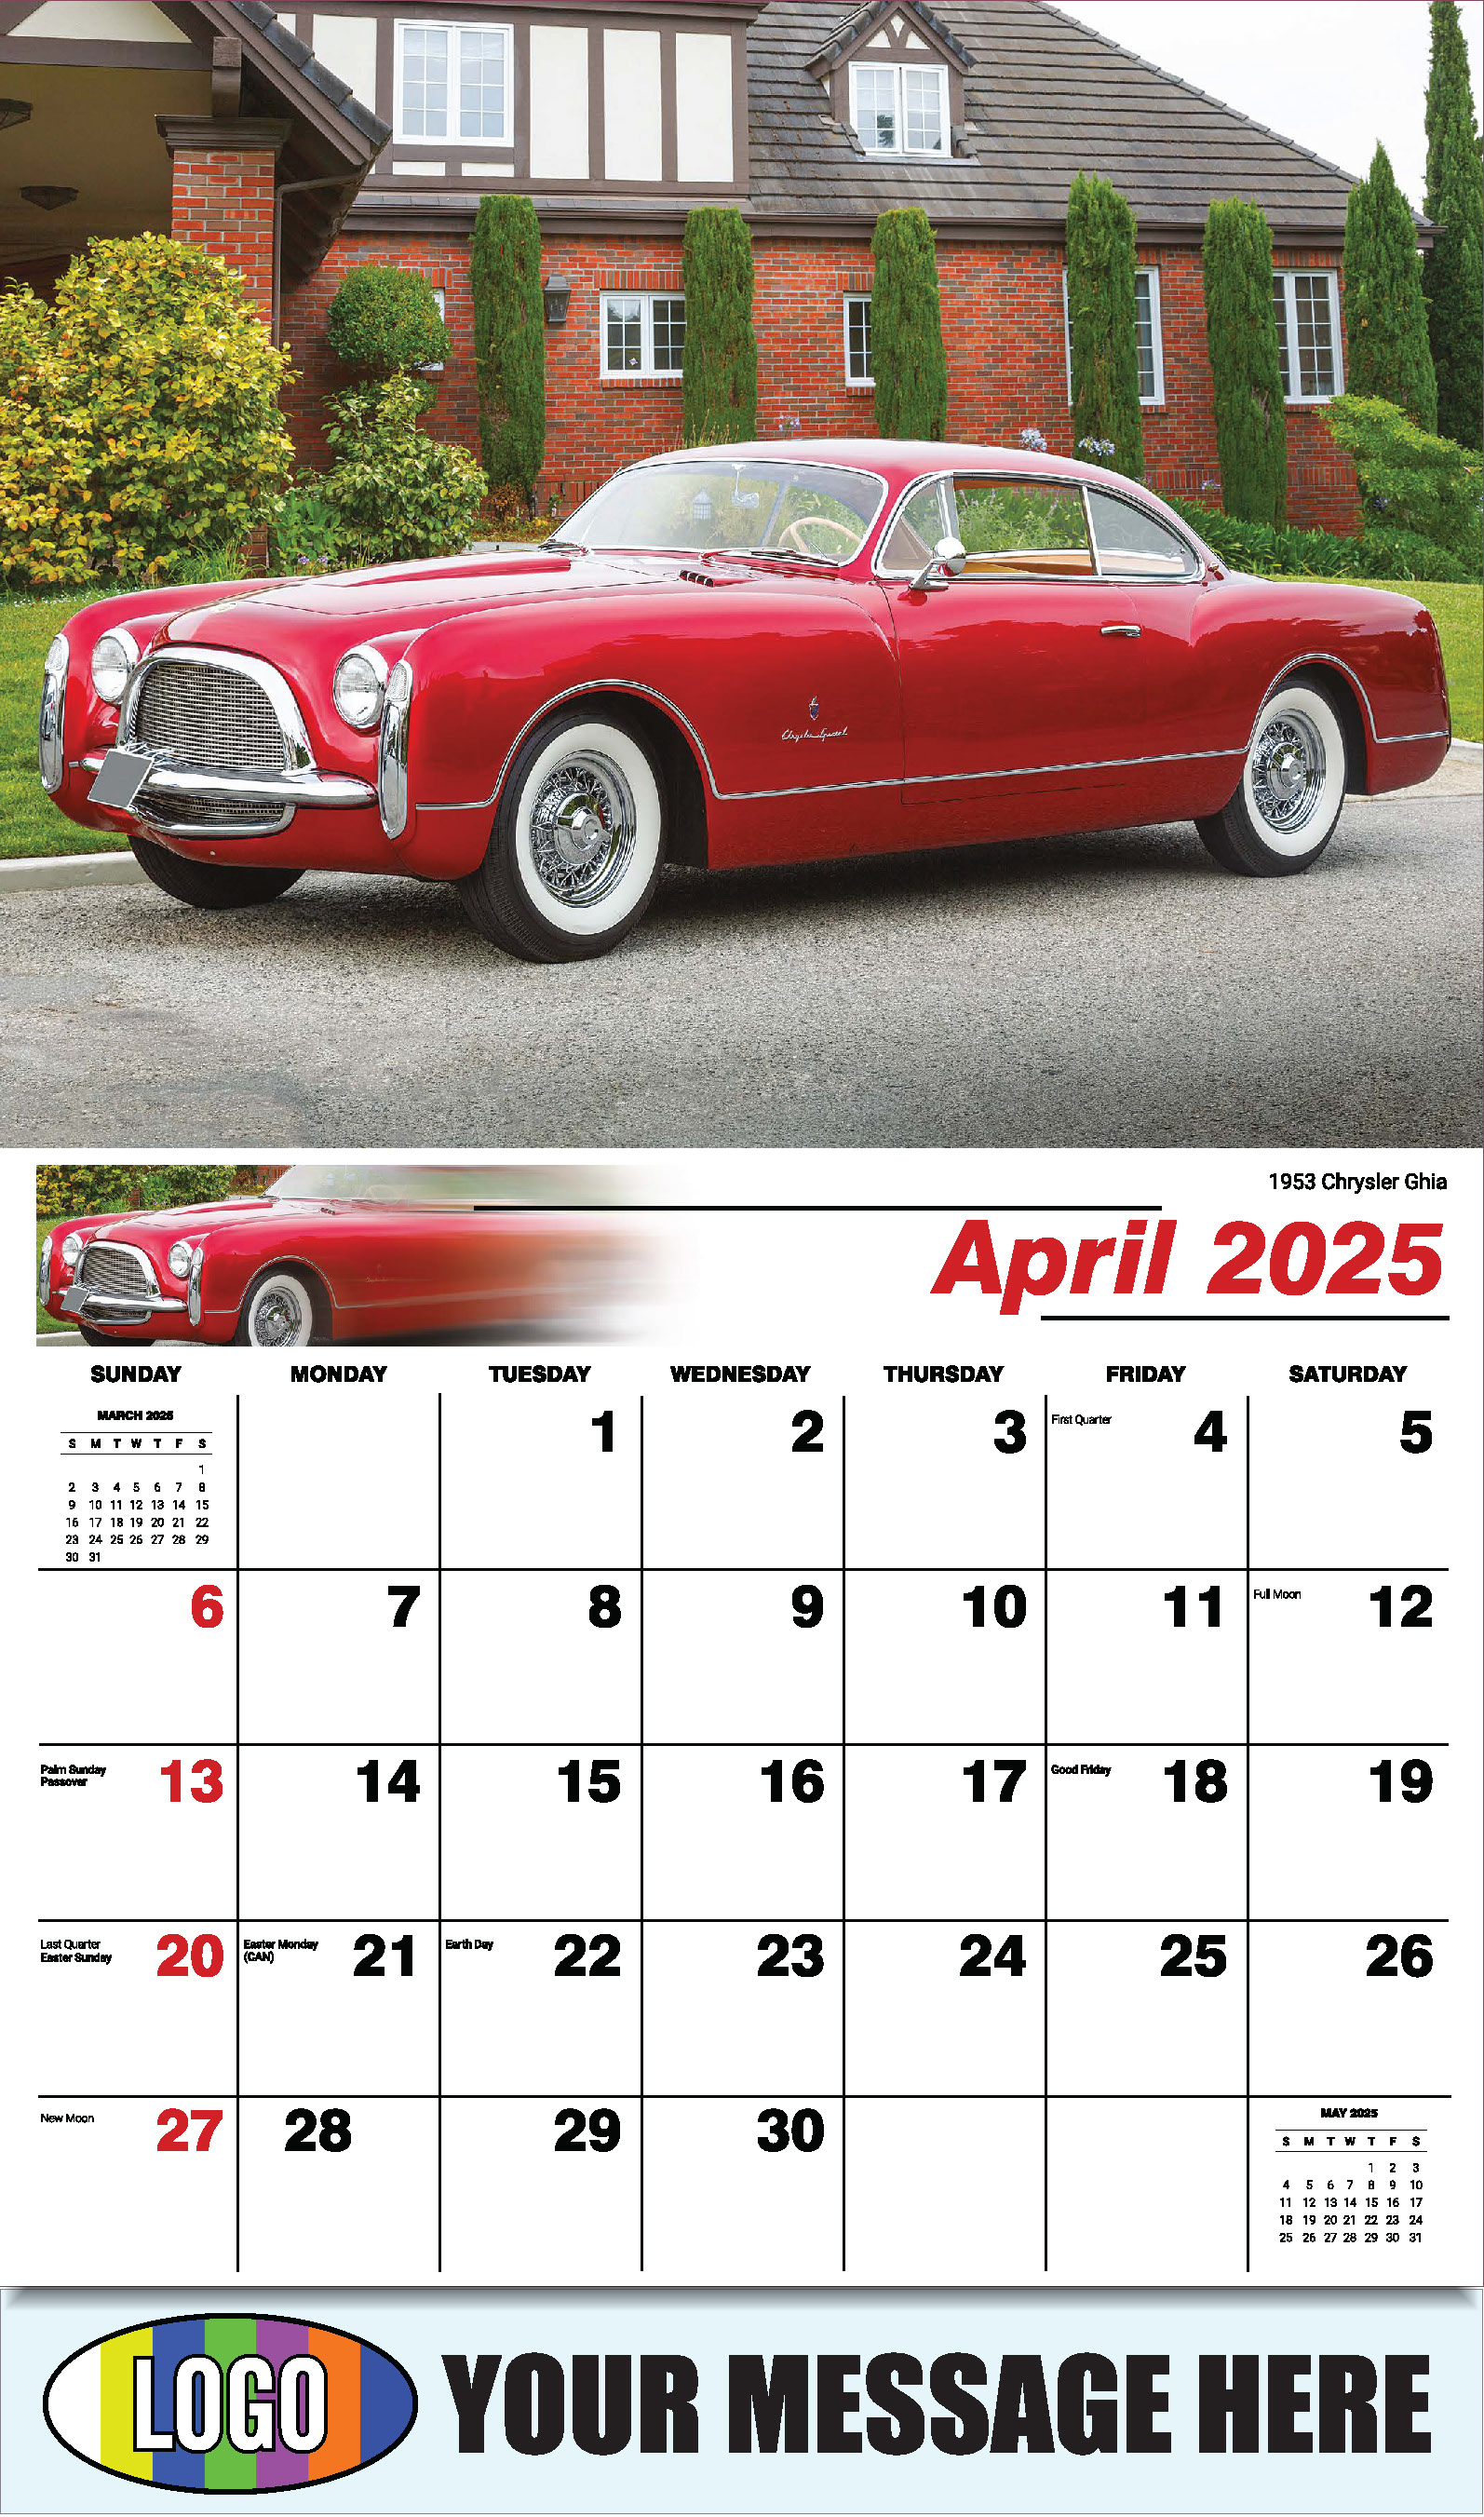 Classic Cars 2025 Automotive Business Promo Calendar - April